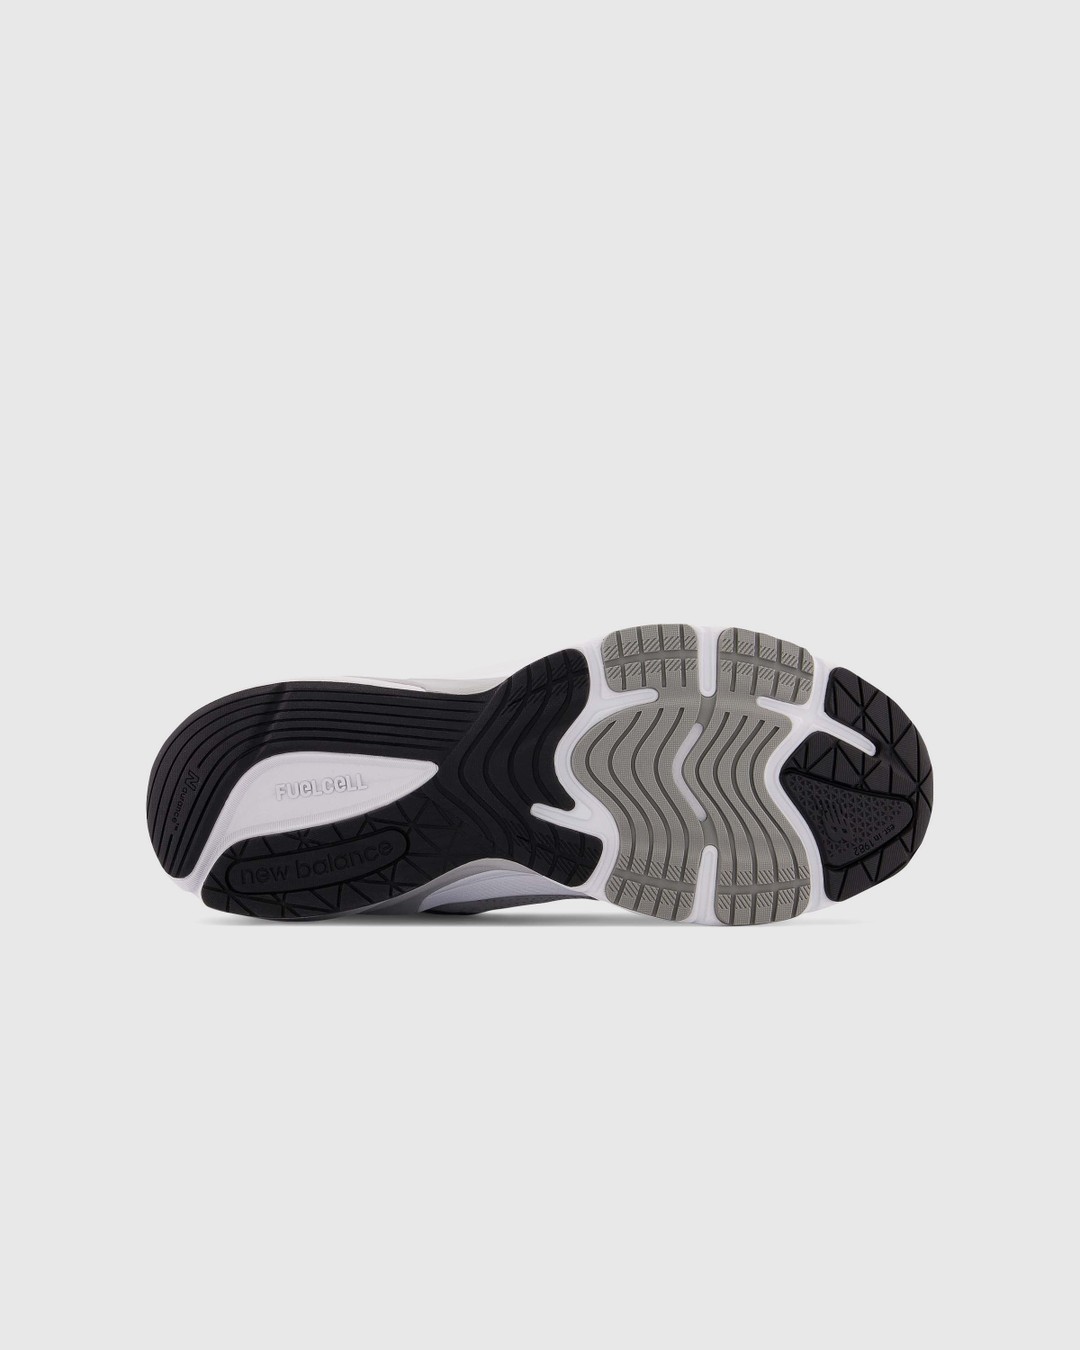 New Balance – M990v6 Cool Gray  - Sneakers - Grey - Image 6